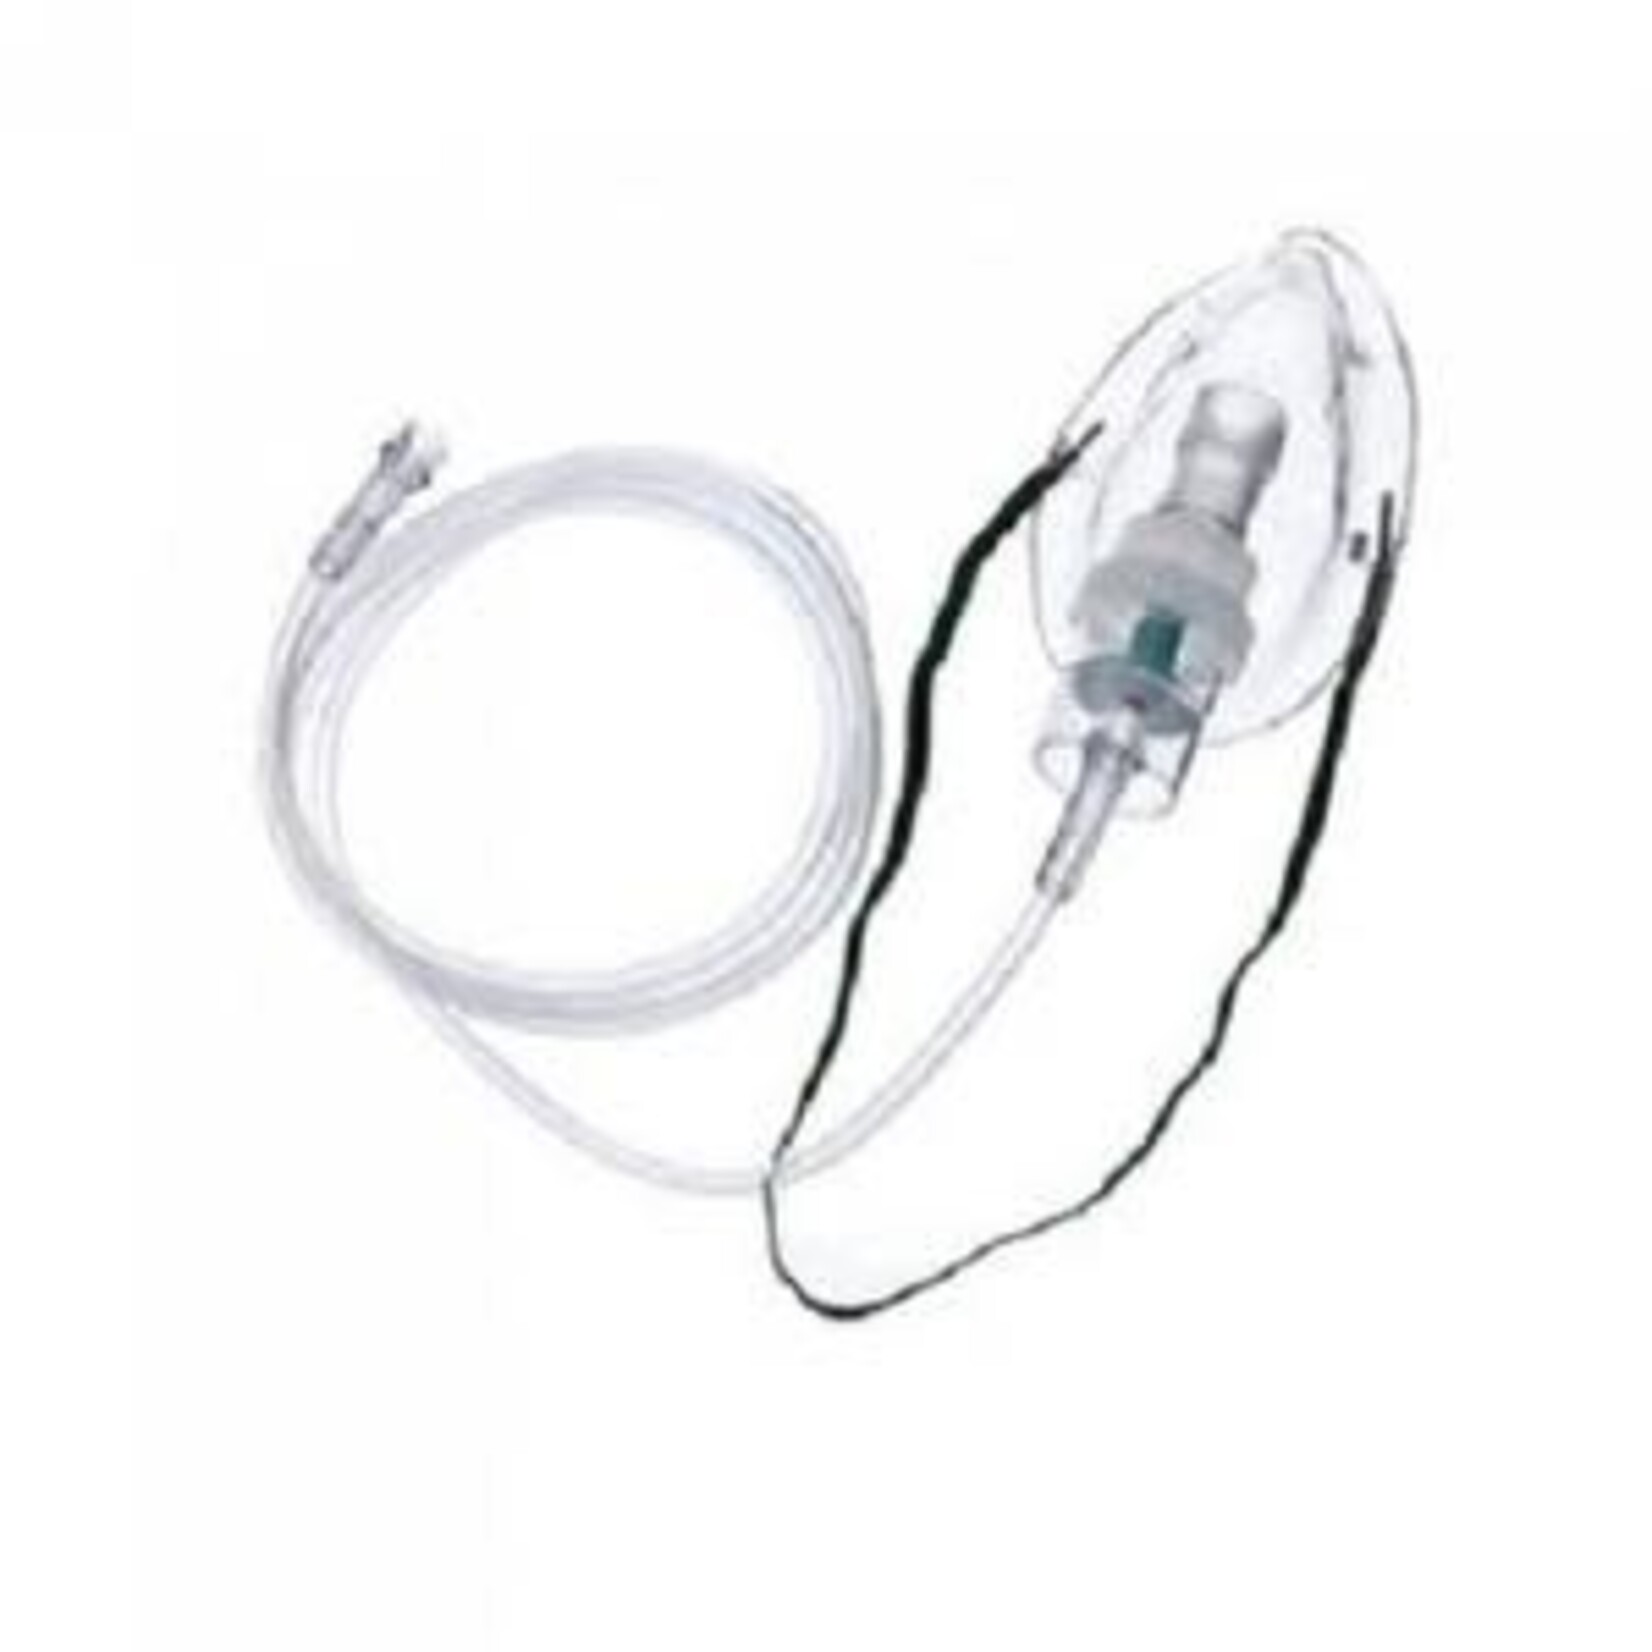 MICRO MIST Teleflex Micro Mist® Nebulizer, 7 ft Tubing, Standard Connector with Pediatric Mask